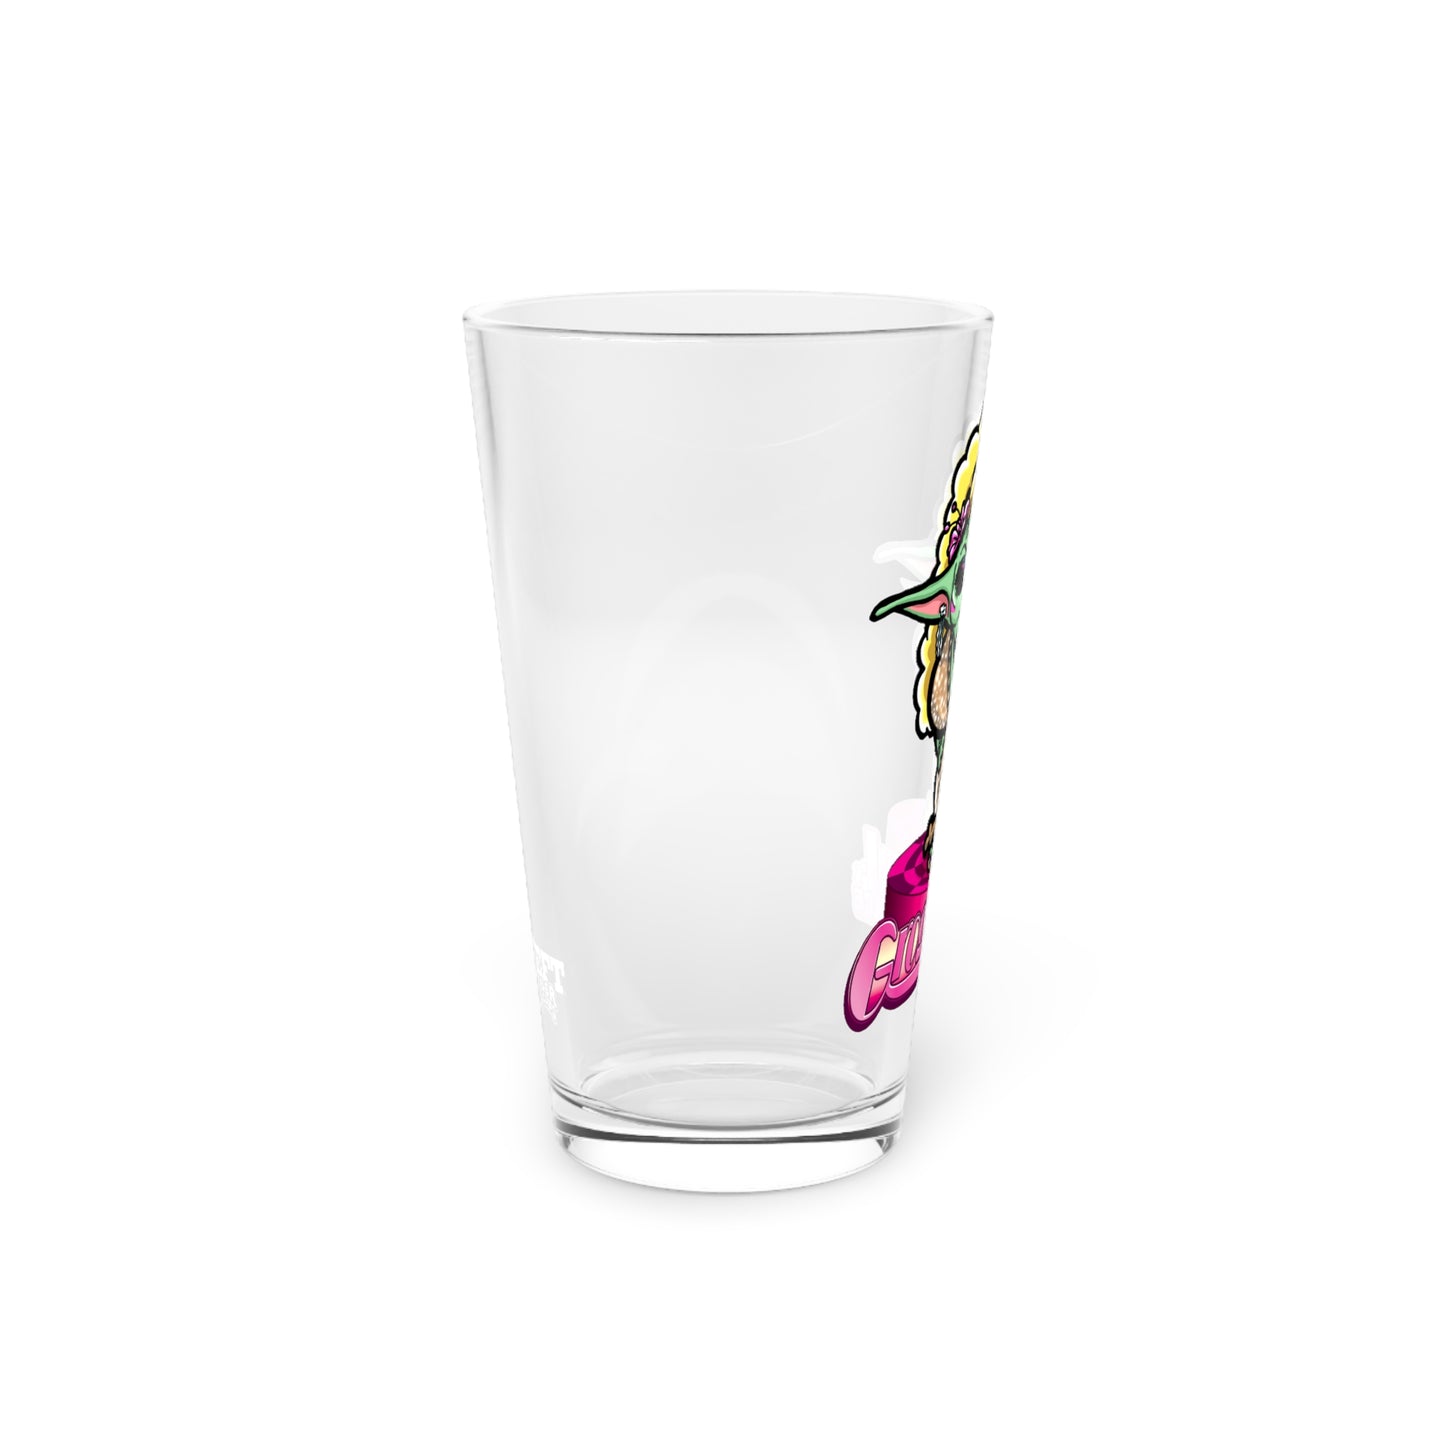 GroguPaul - Pint Glass